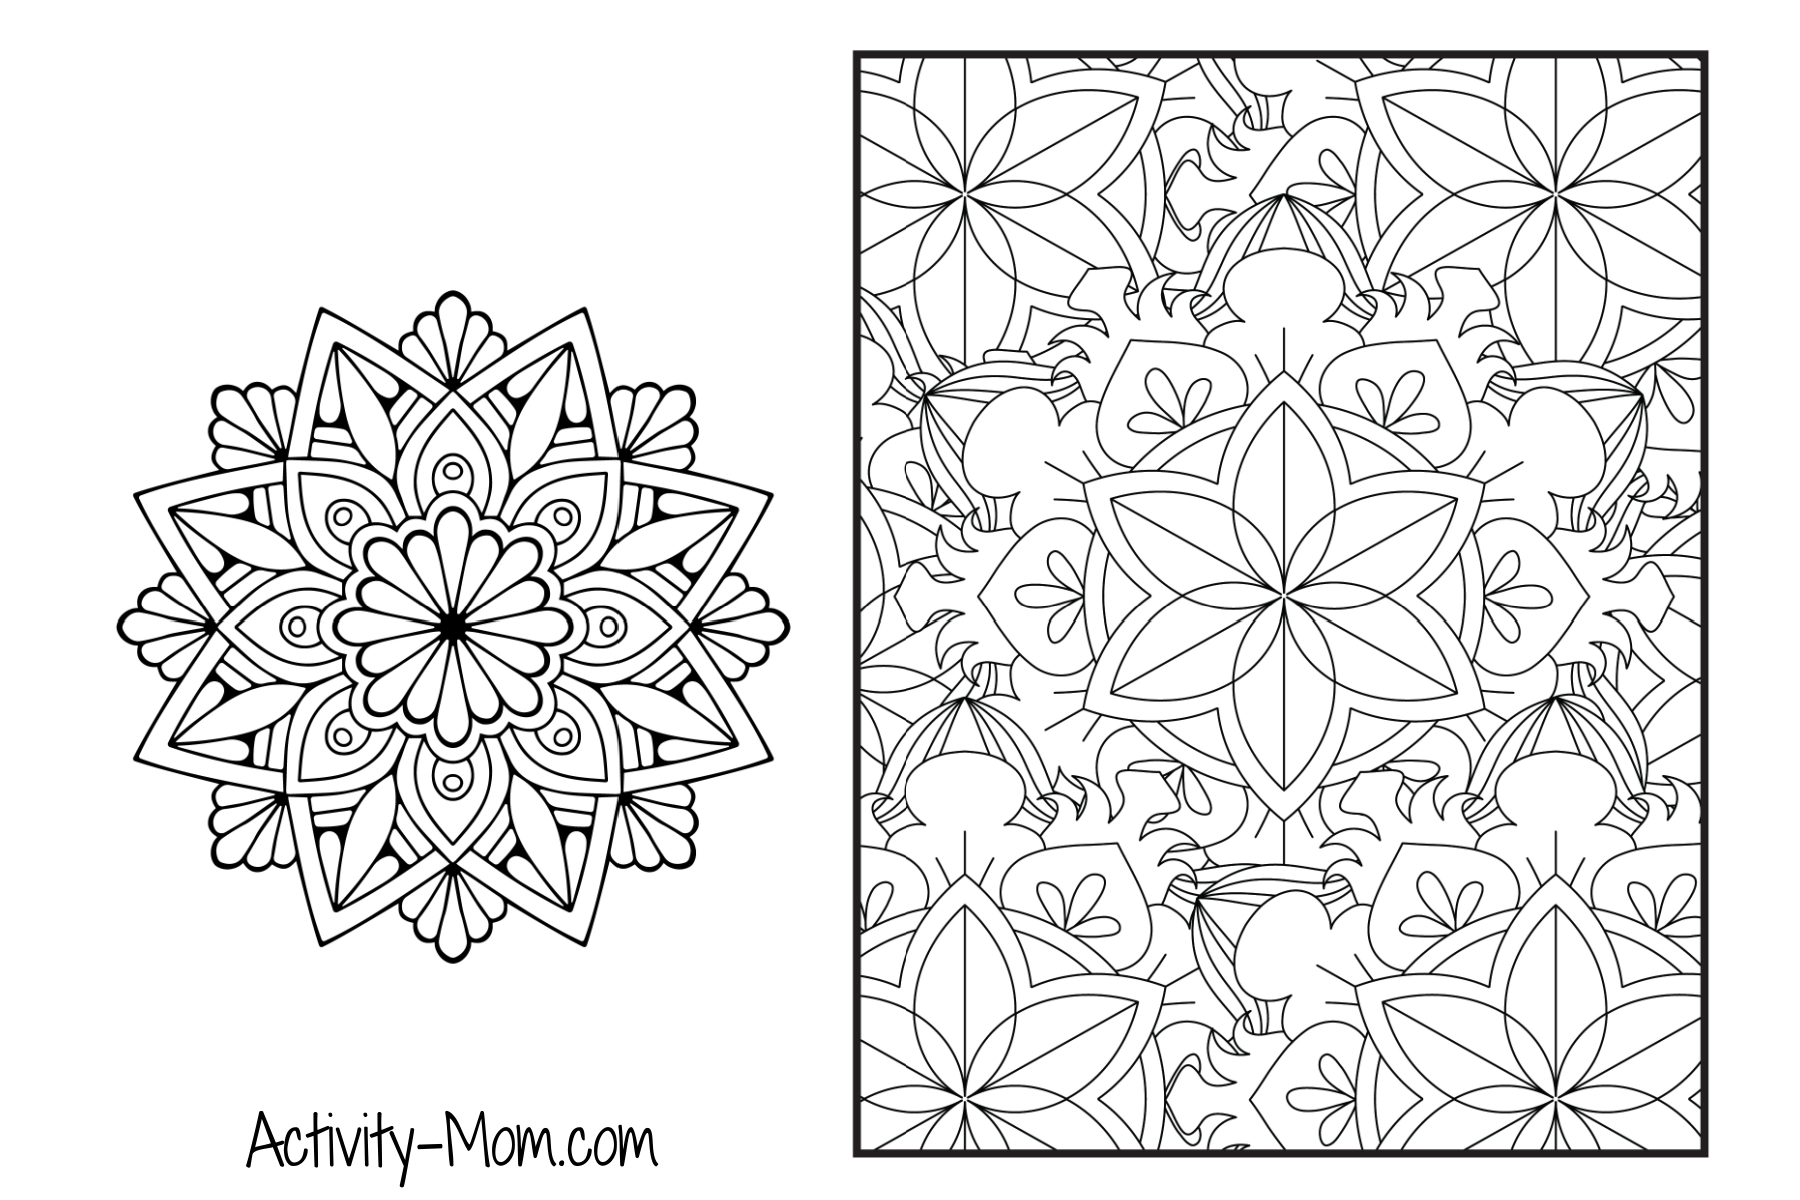 Mandala coloring pages free printable